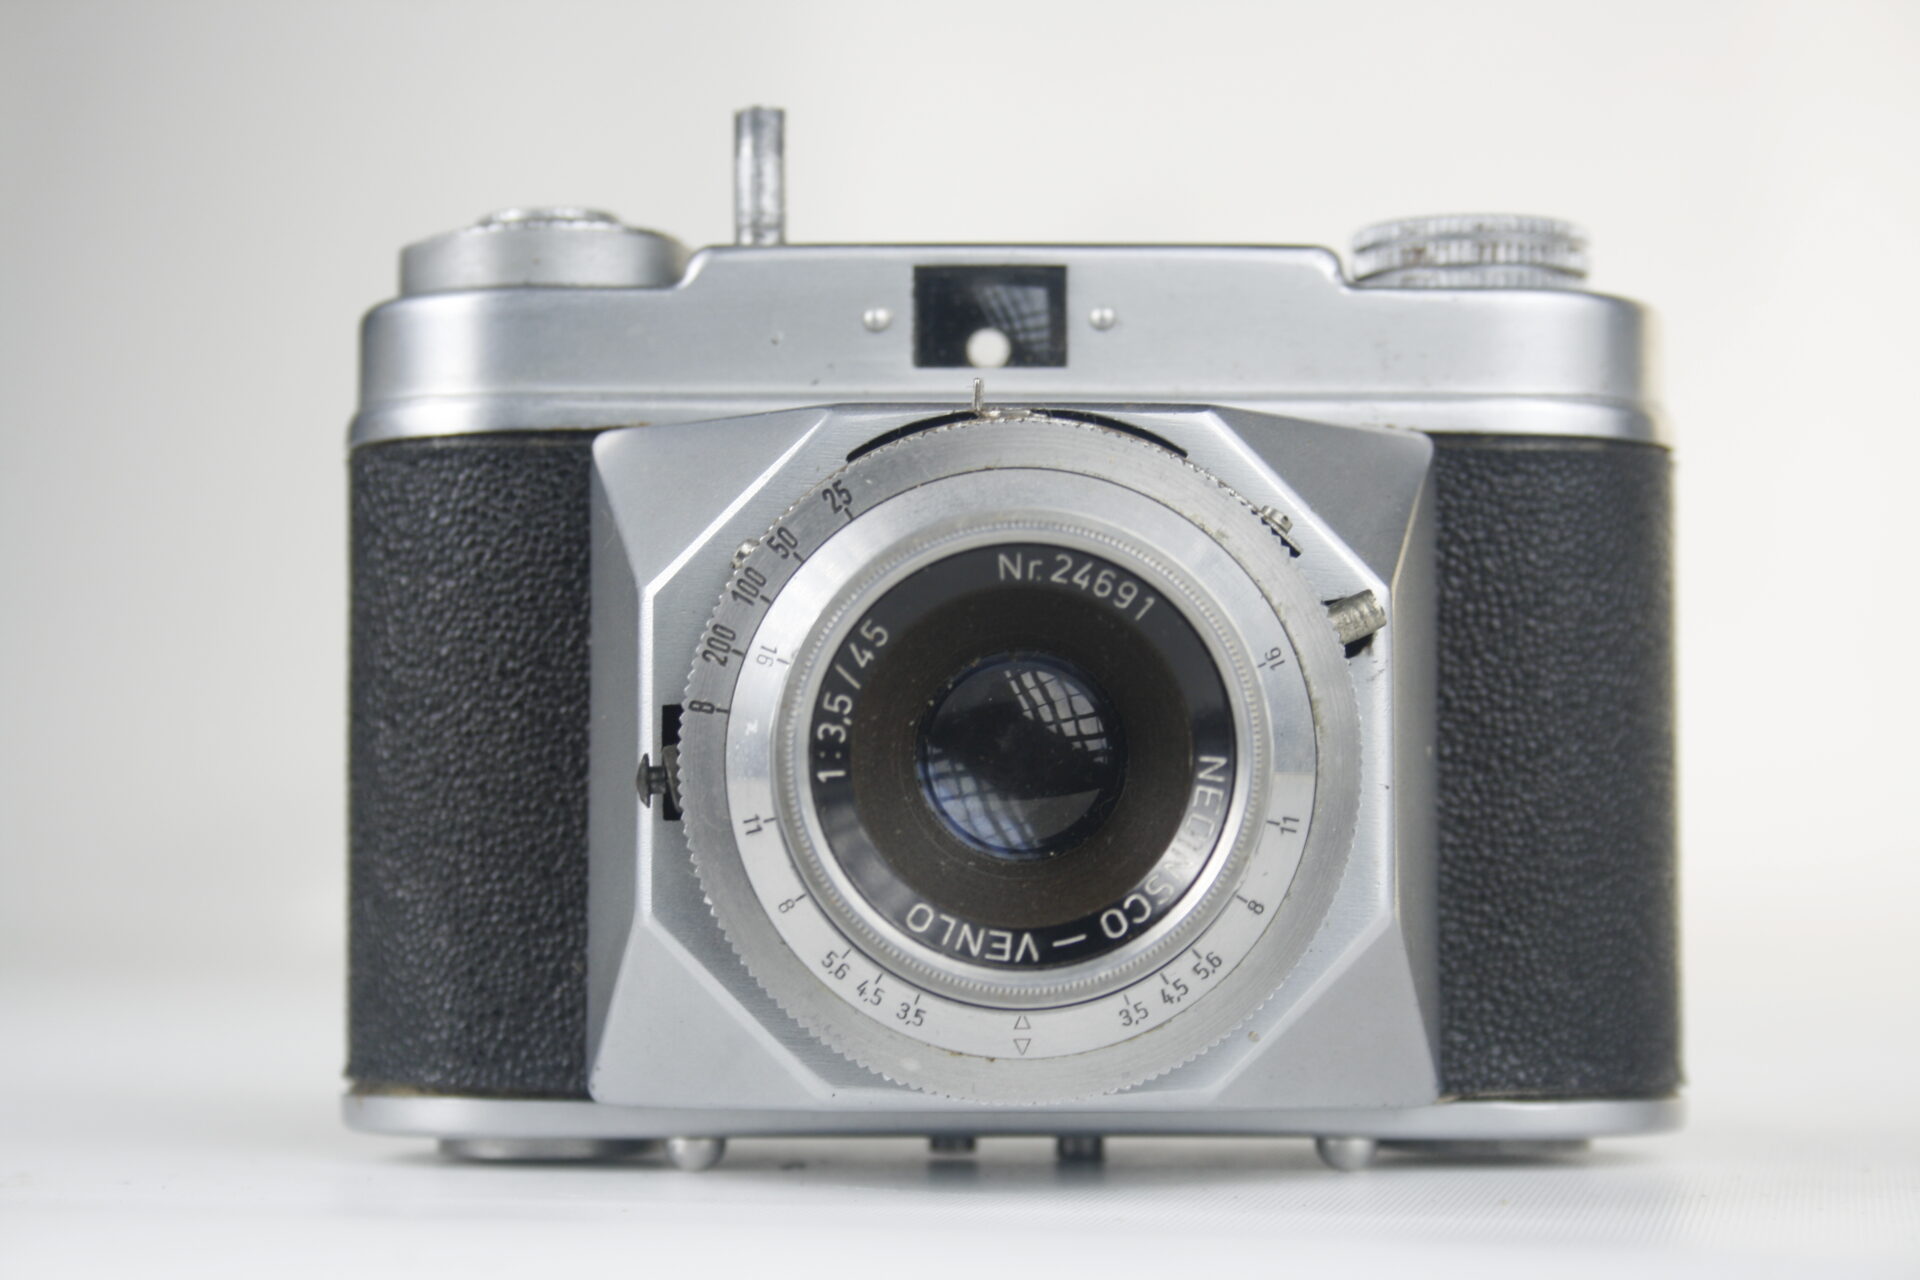 Nedinsco Primo tweede model. 35mm viewfinder camera. Ca. 1958-1962. Nederland.